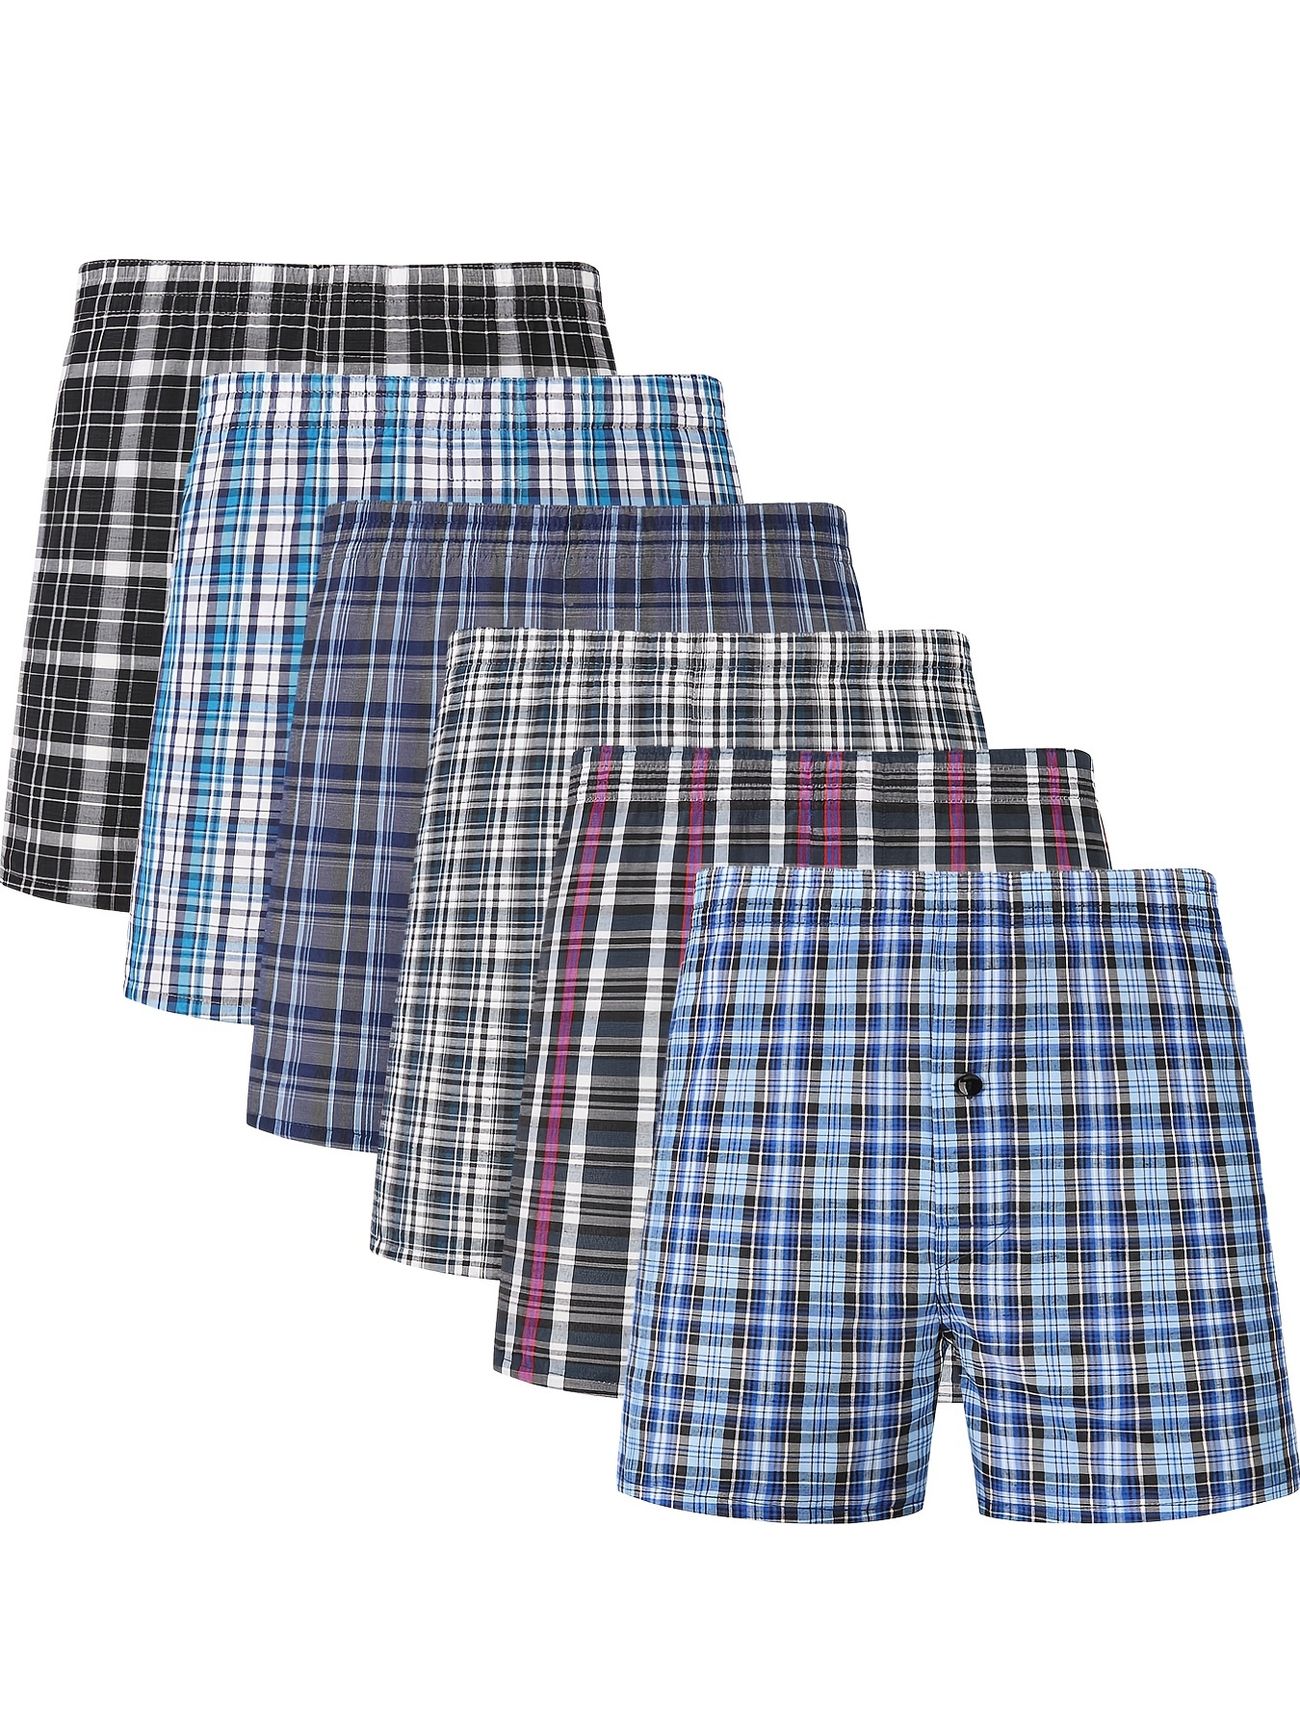 jupitersecret 6pairs casual plaid elastic waistband button boxer shorts mens boxer underwear mixed color